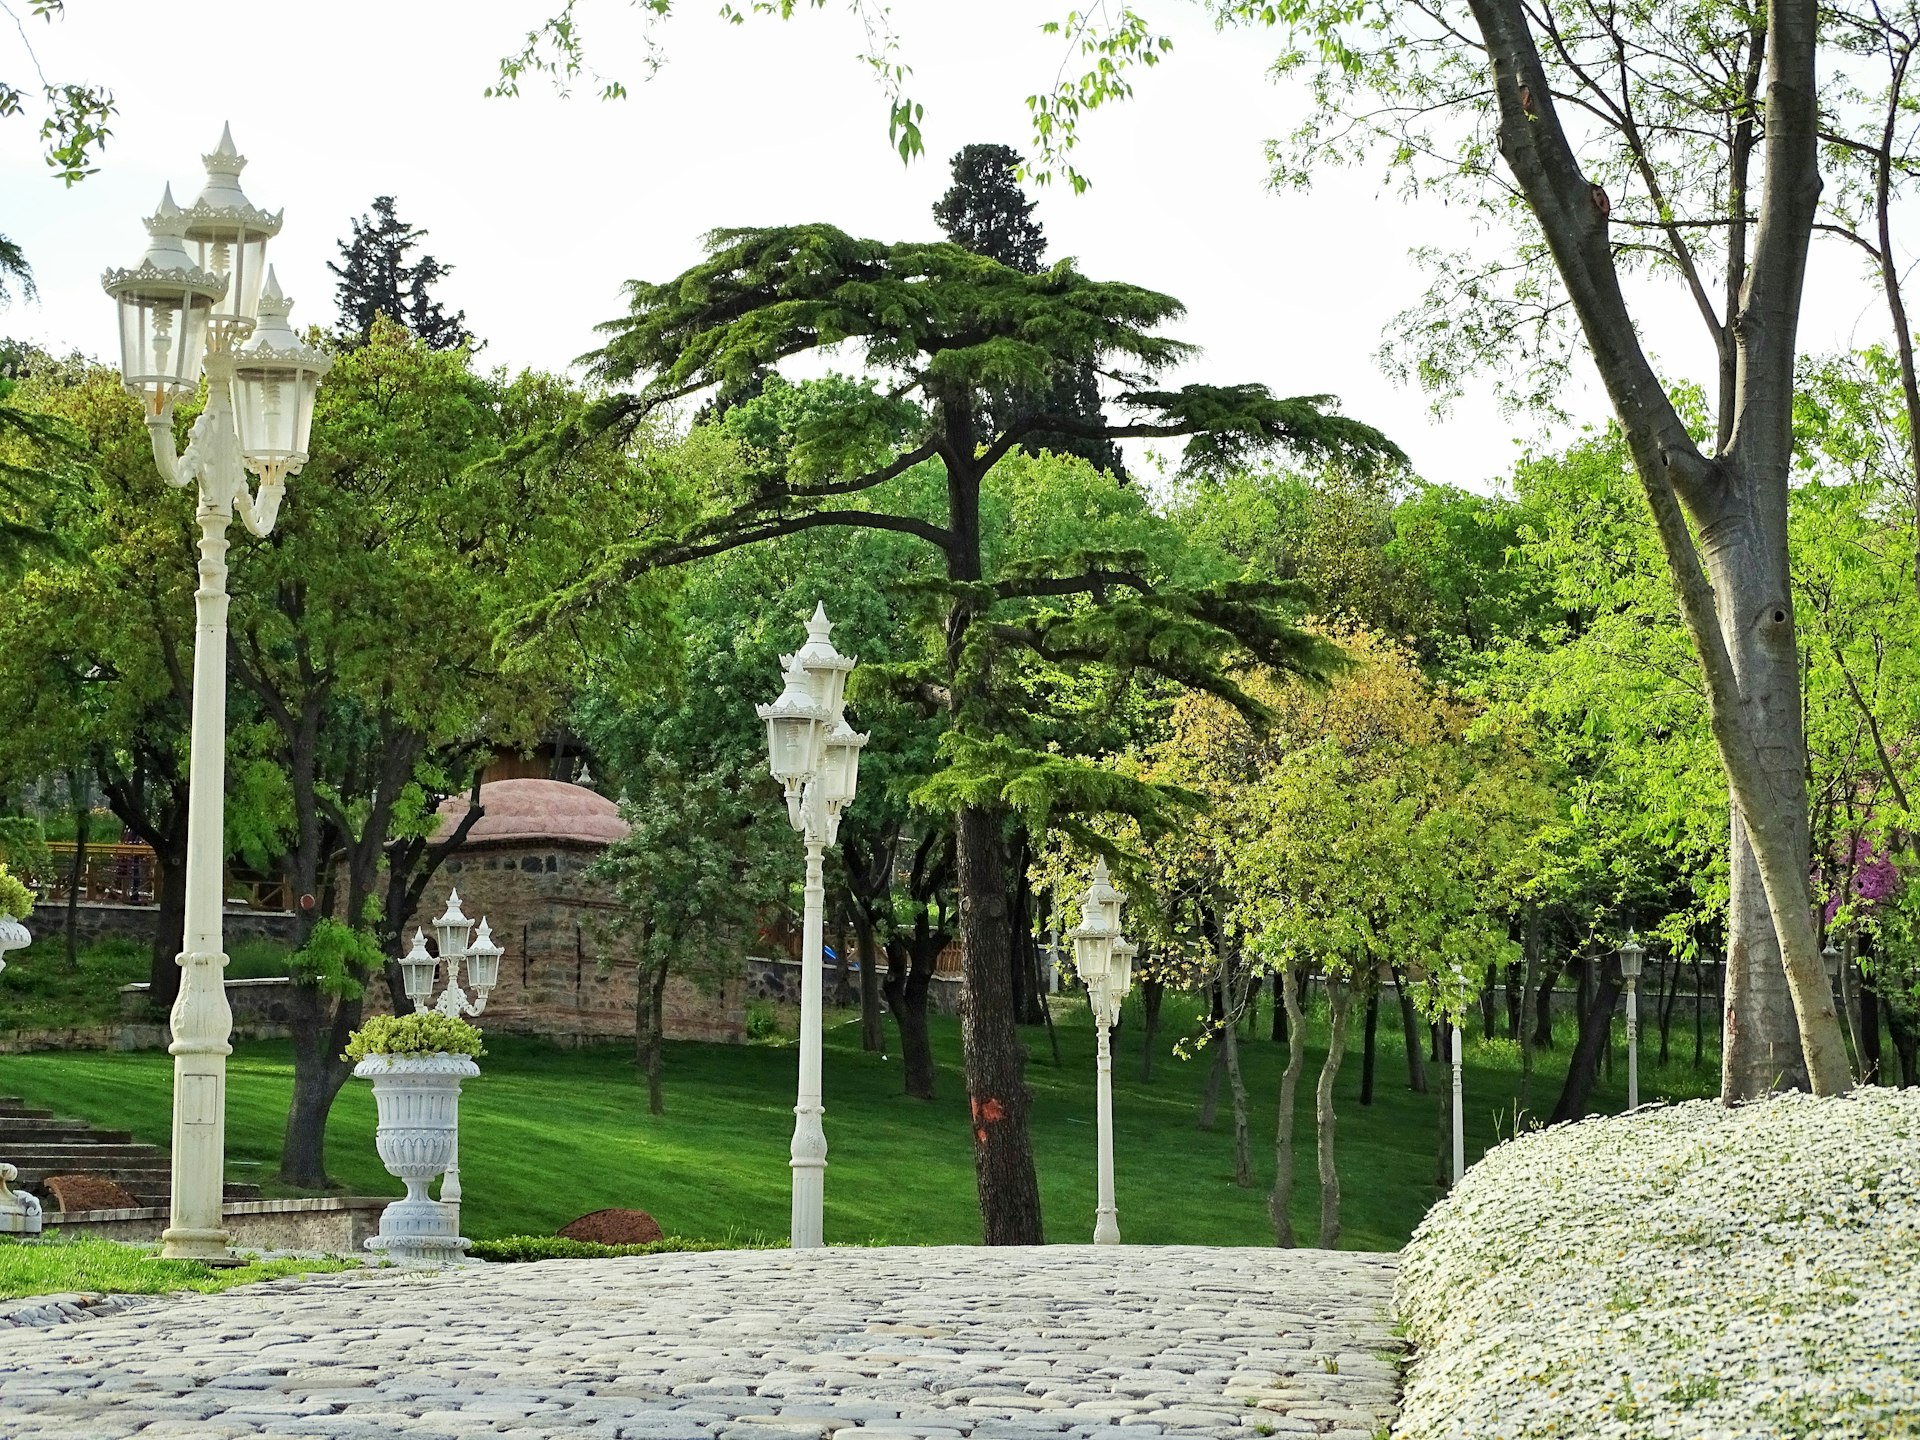 Lush greenery and decor in Yildiz Park in Istanbul